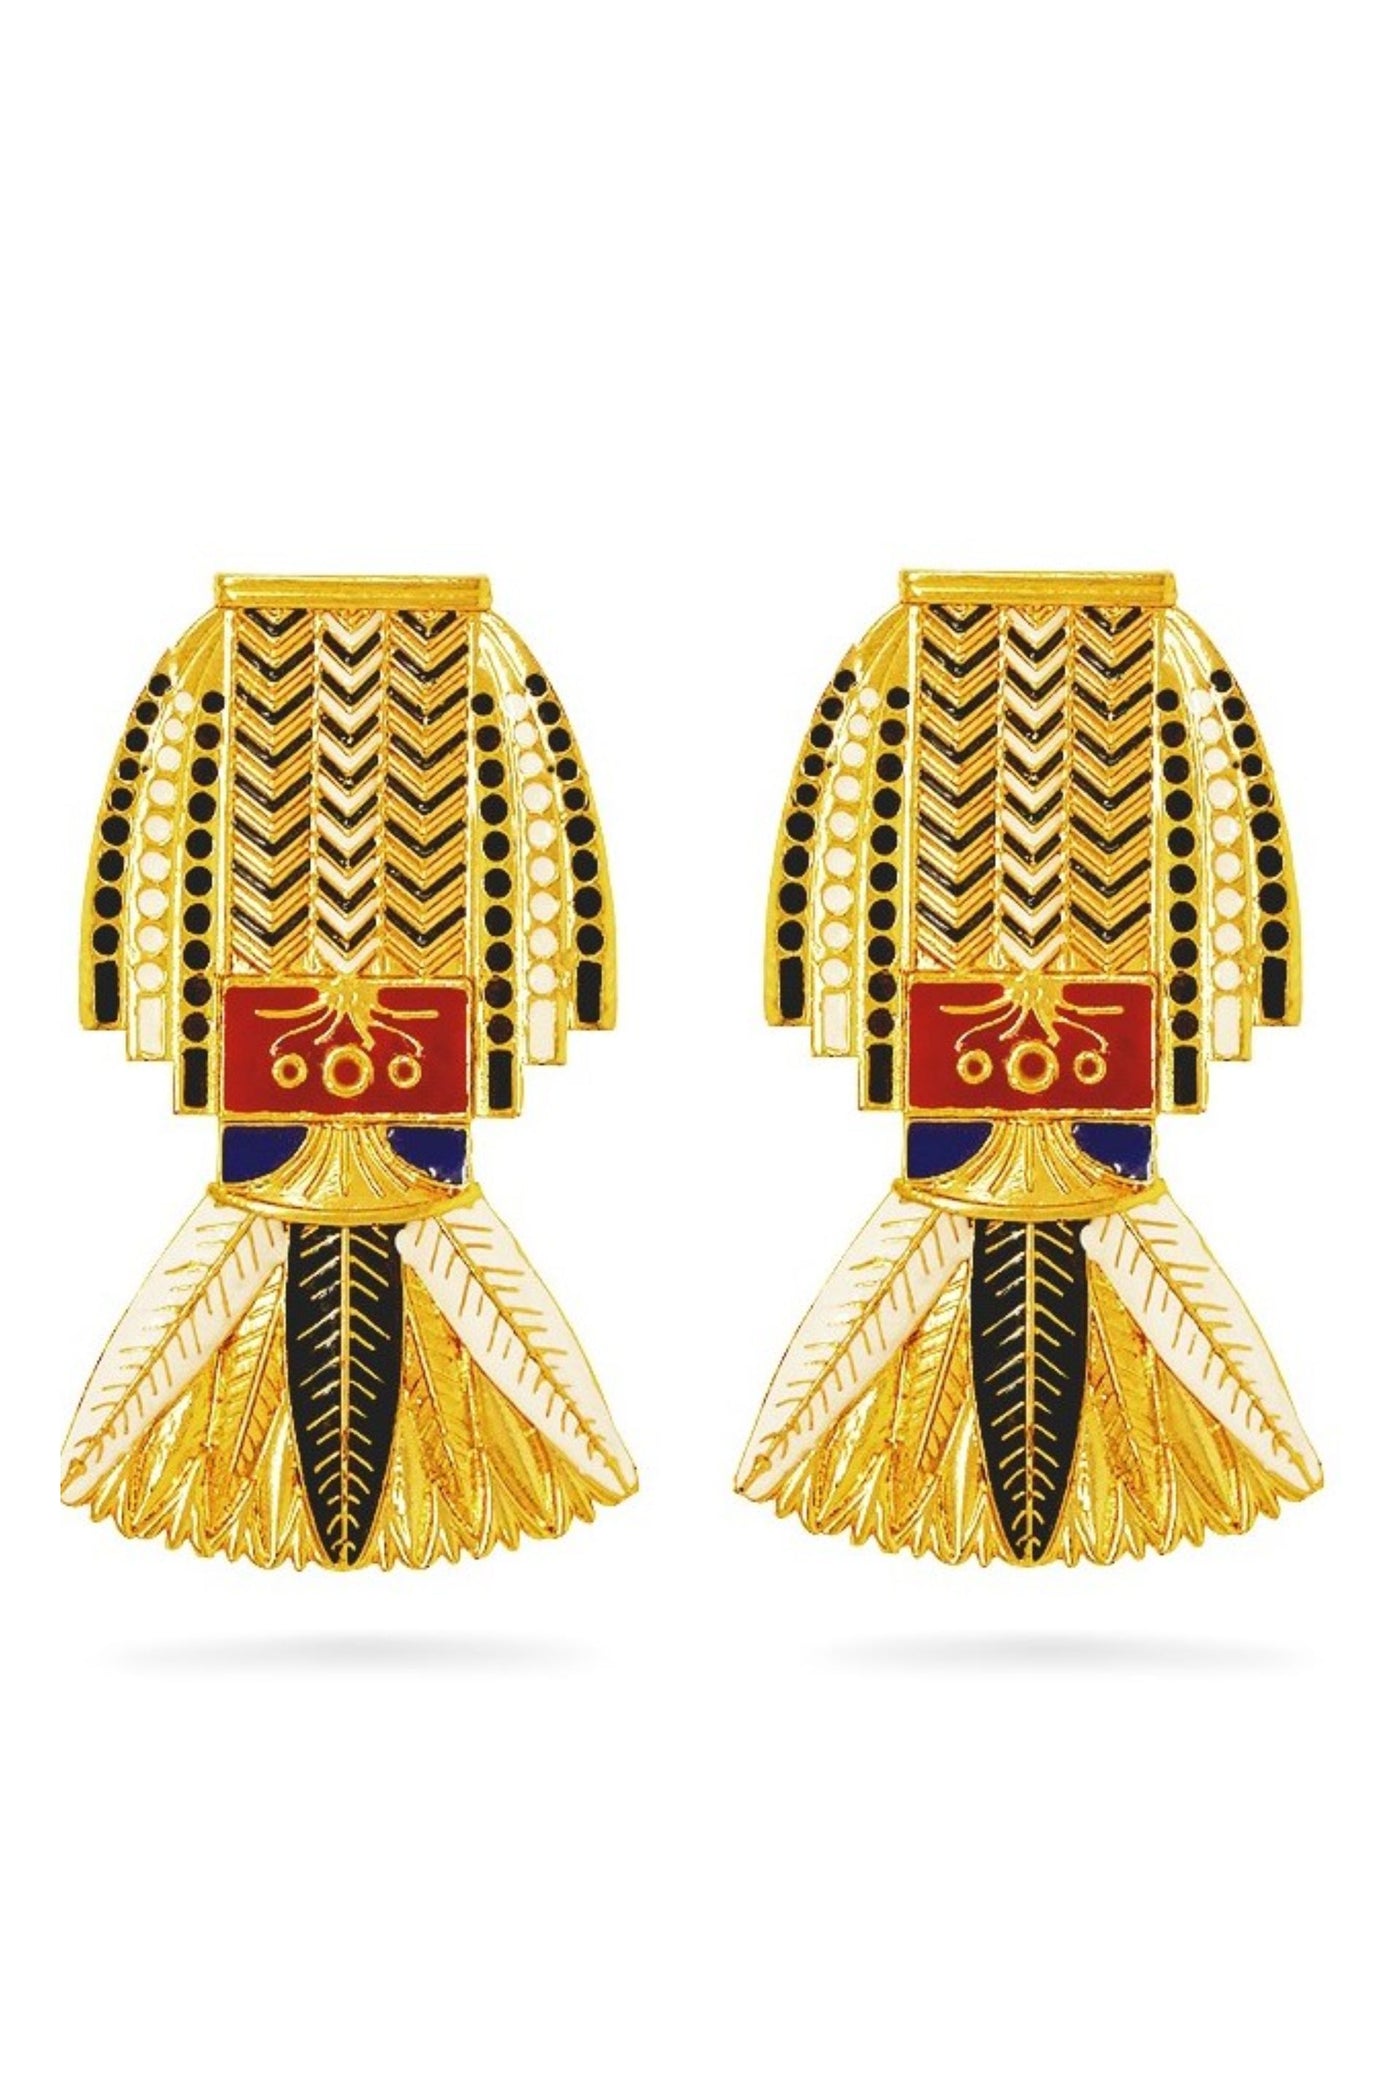 Valliyan allure cleopatra earrings fashion jewellery online shopping melange singapore indian designer wear